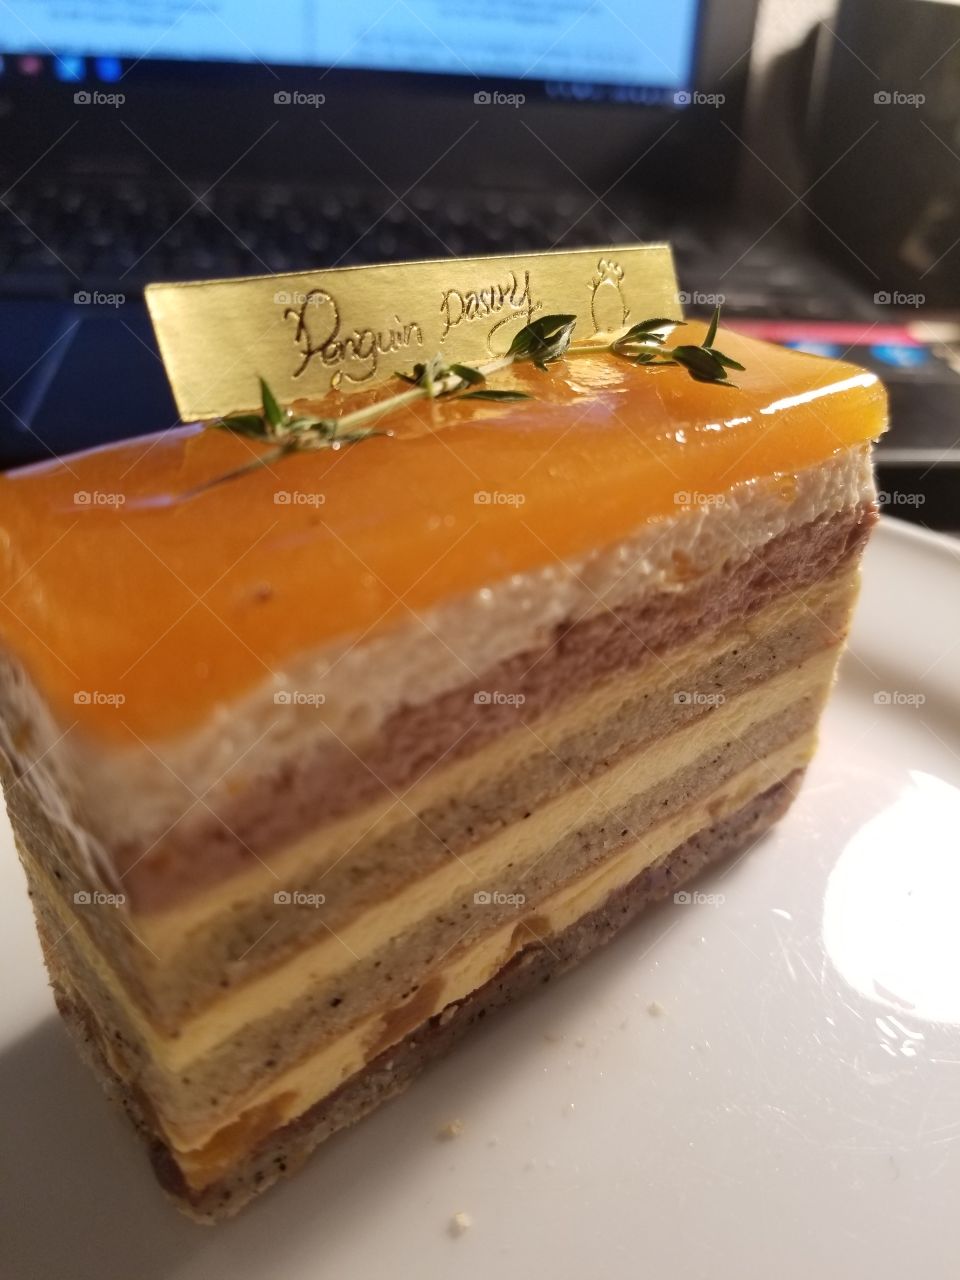 Penguin Pastry orange cake, Tokyo Japan